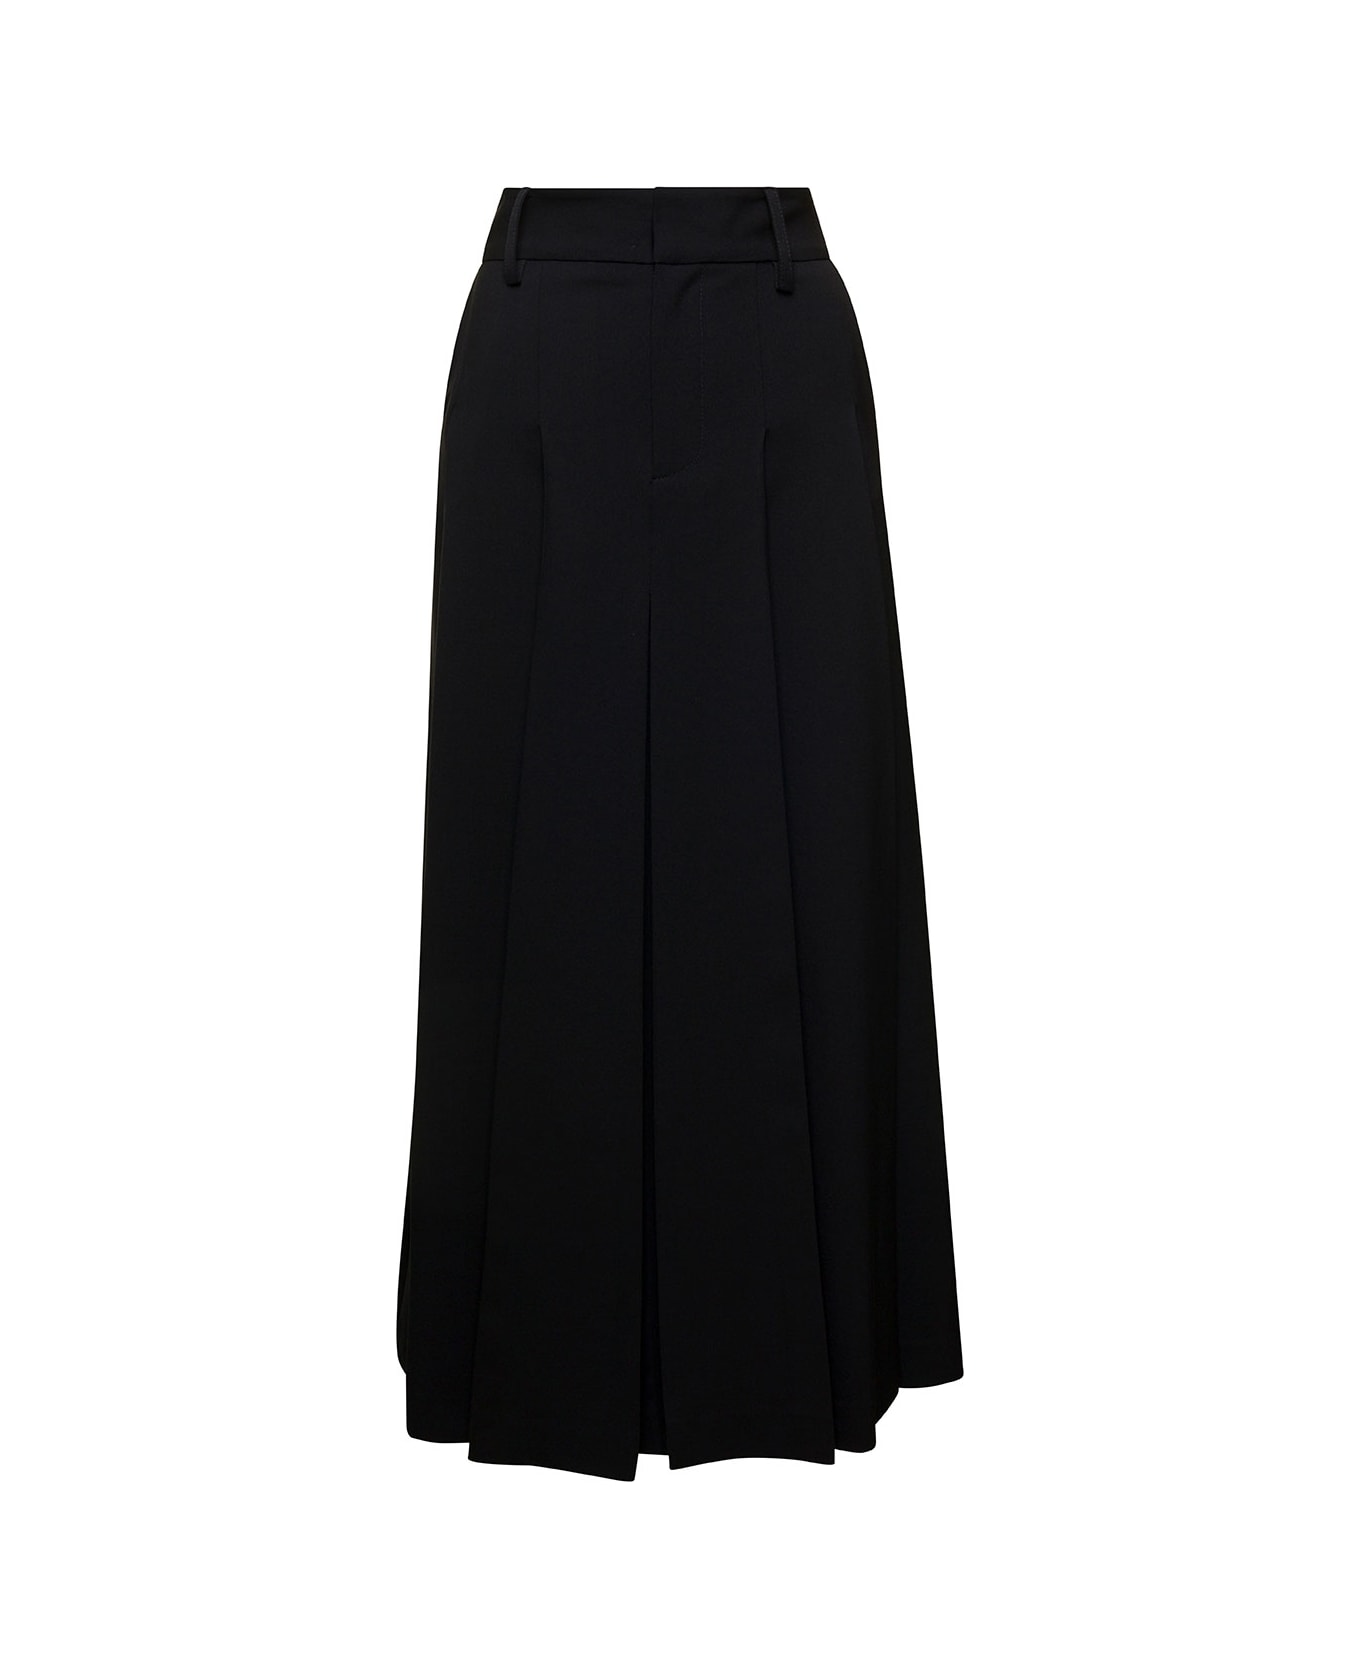 Parosh Long Black Pleated Skirt With Belt Loops In Stretch Wool Woman - Black